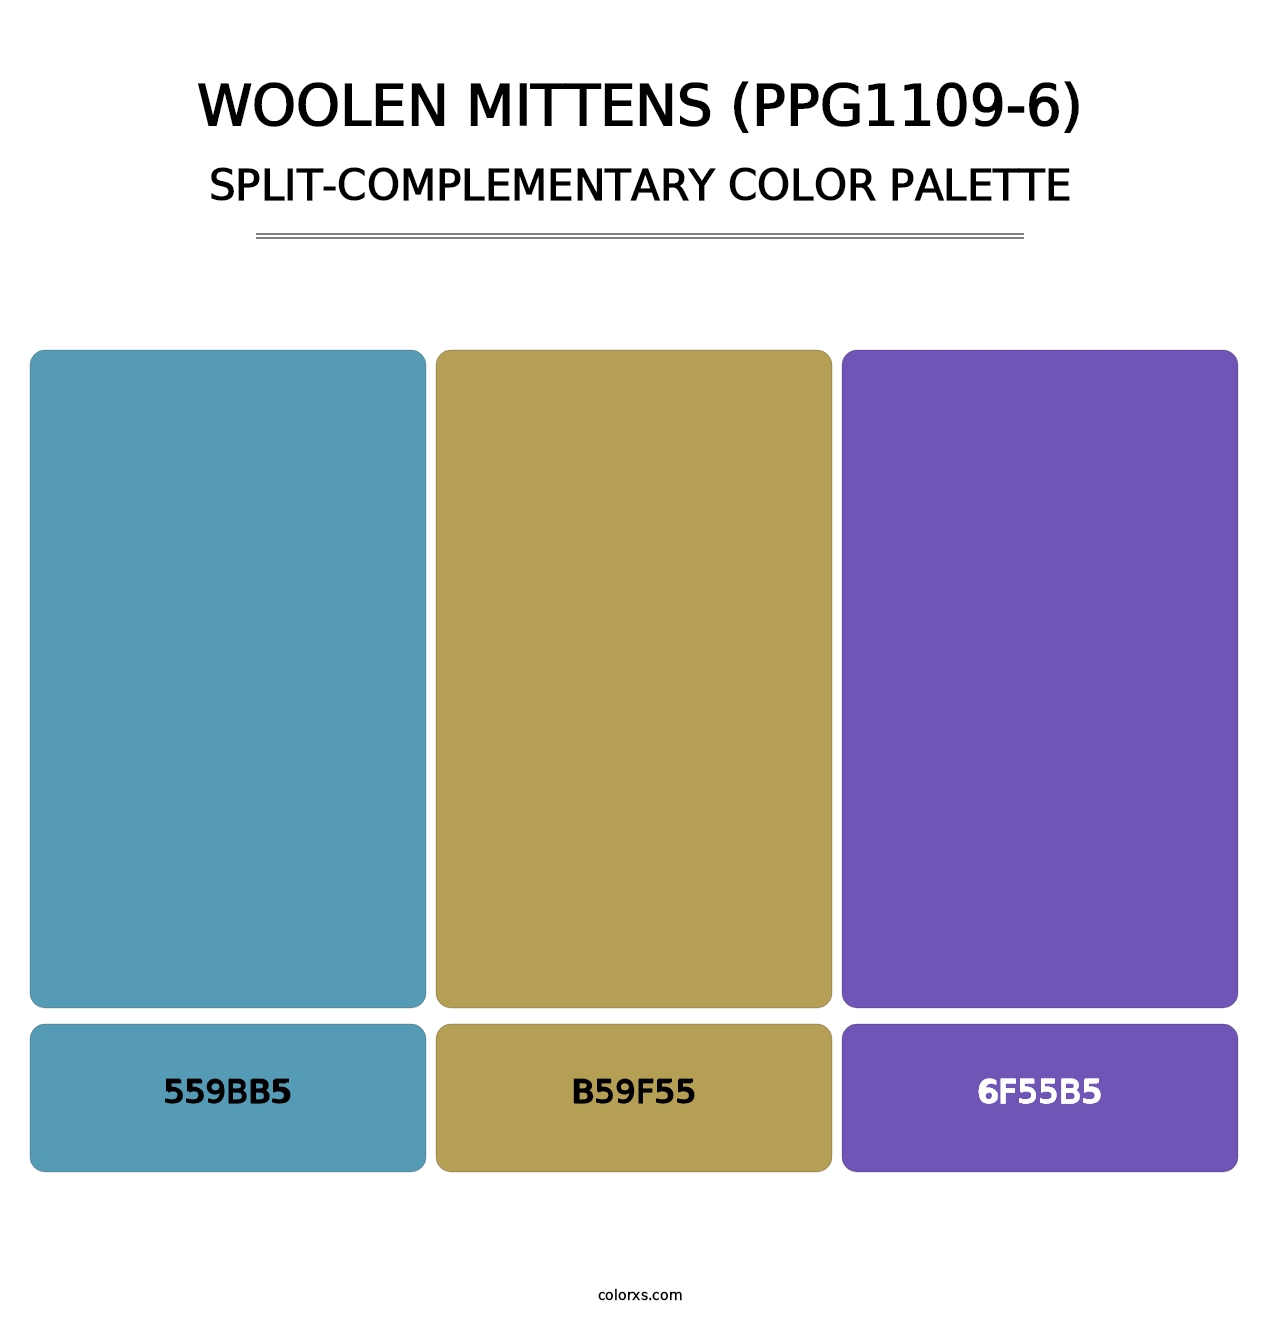 Woolen Mittens (PPG1109-6) - Split-Complementary Color Palette